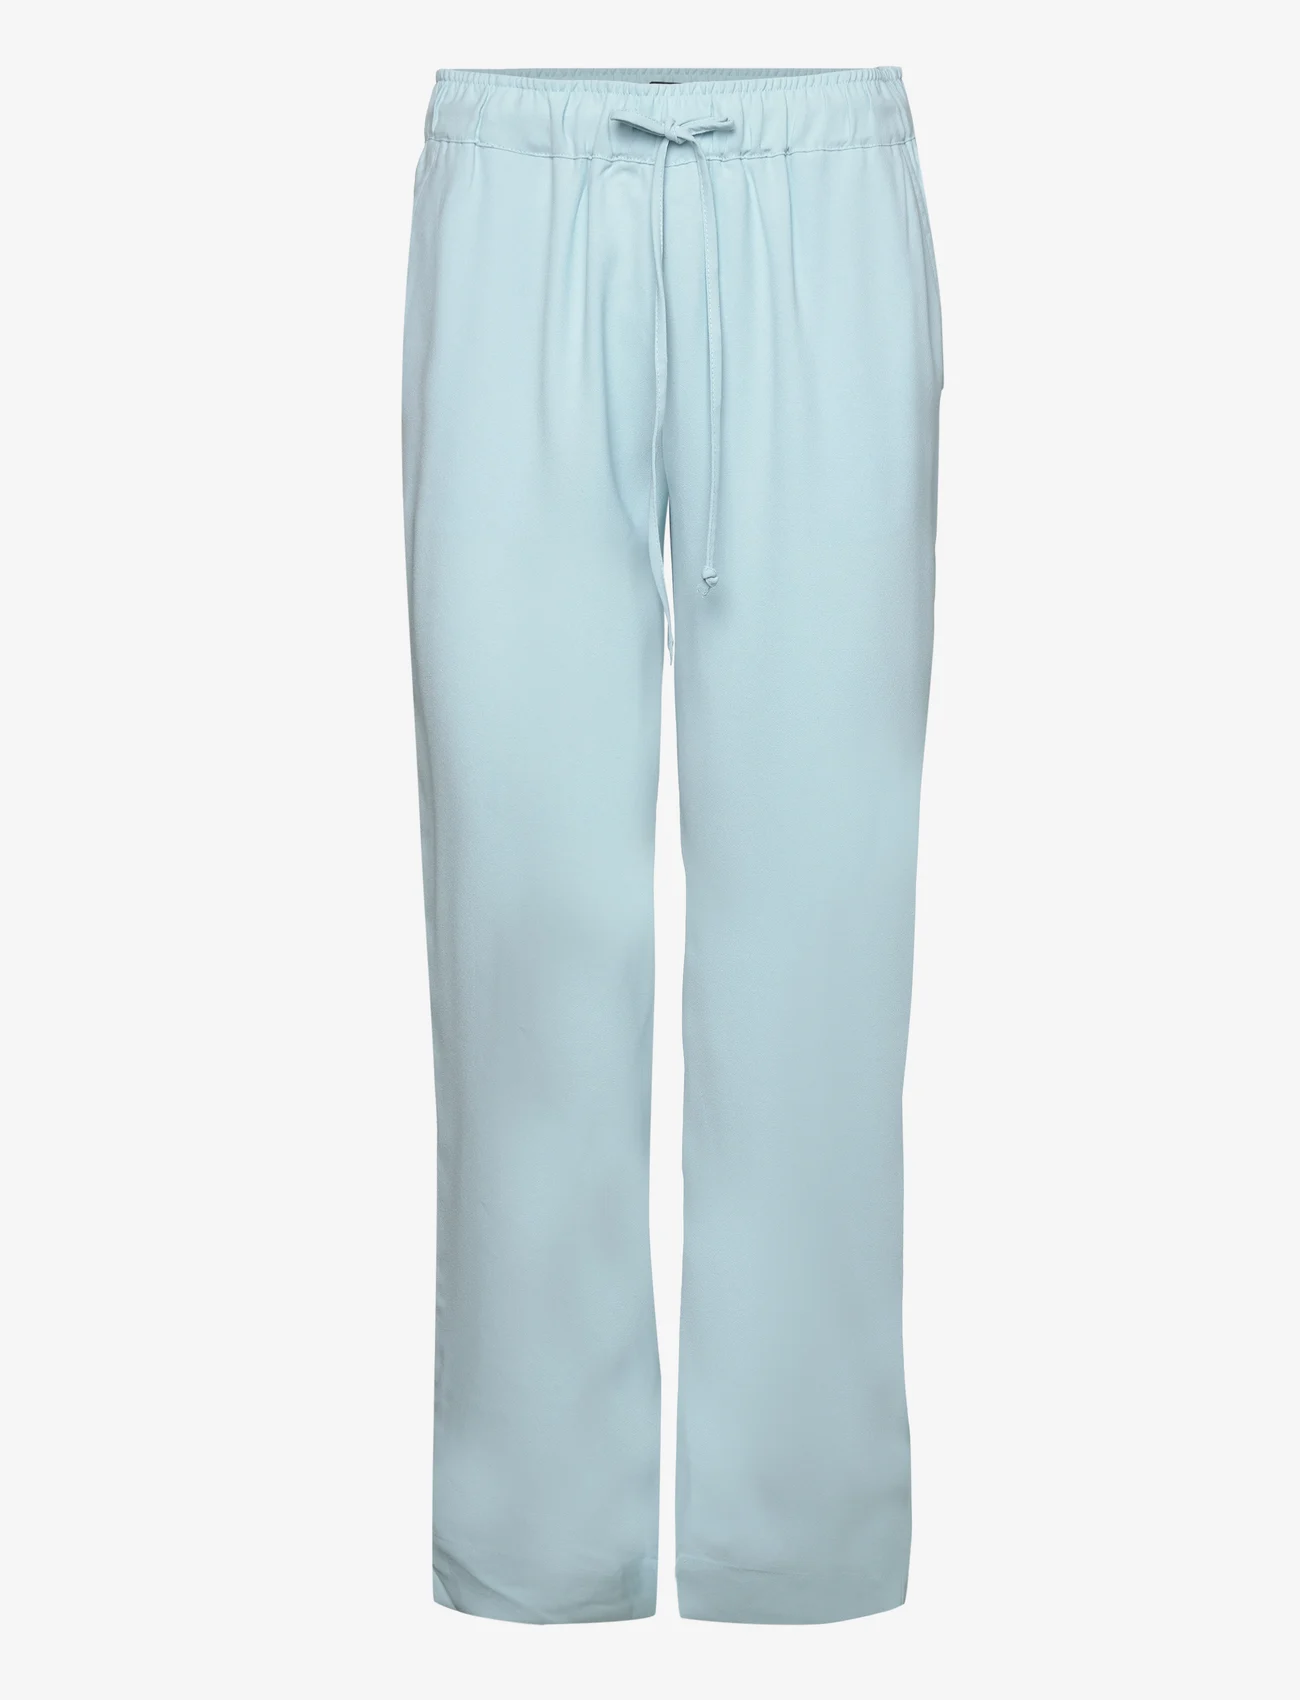 Soaked in Luxury - SLShirley Tapered Pants - bukser med lige ben - corydalis blue - 0